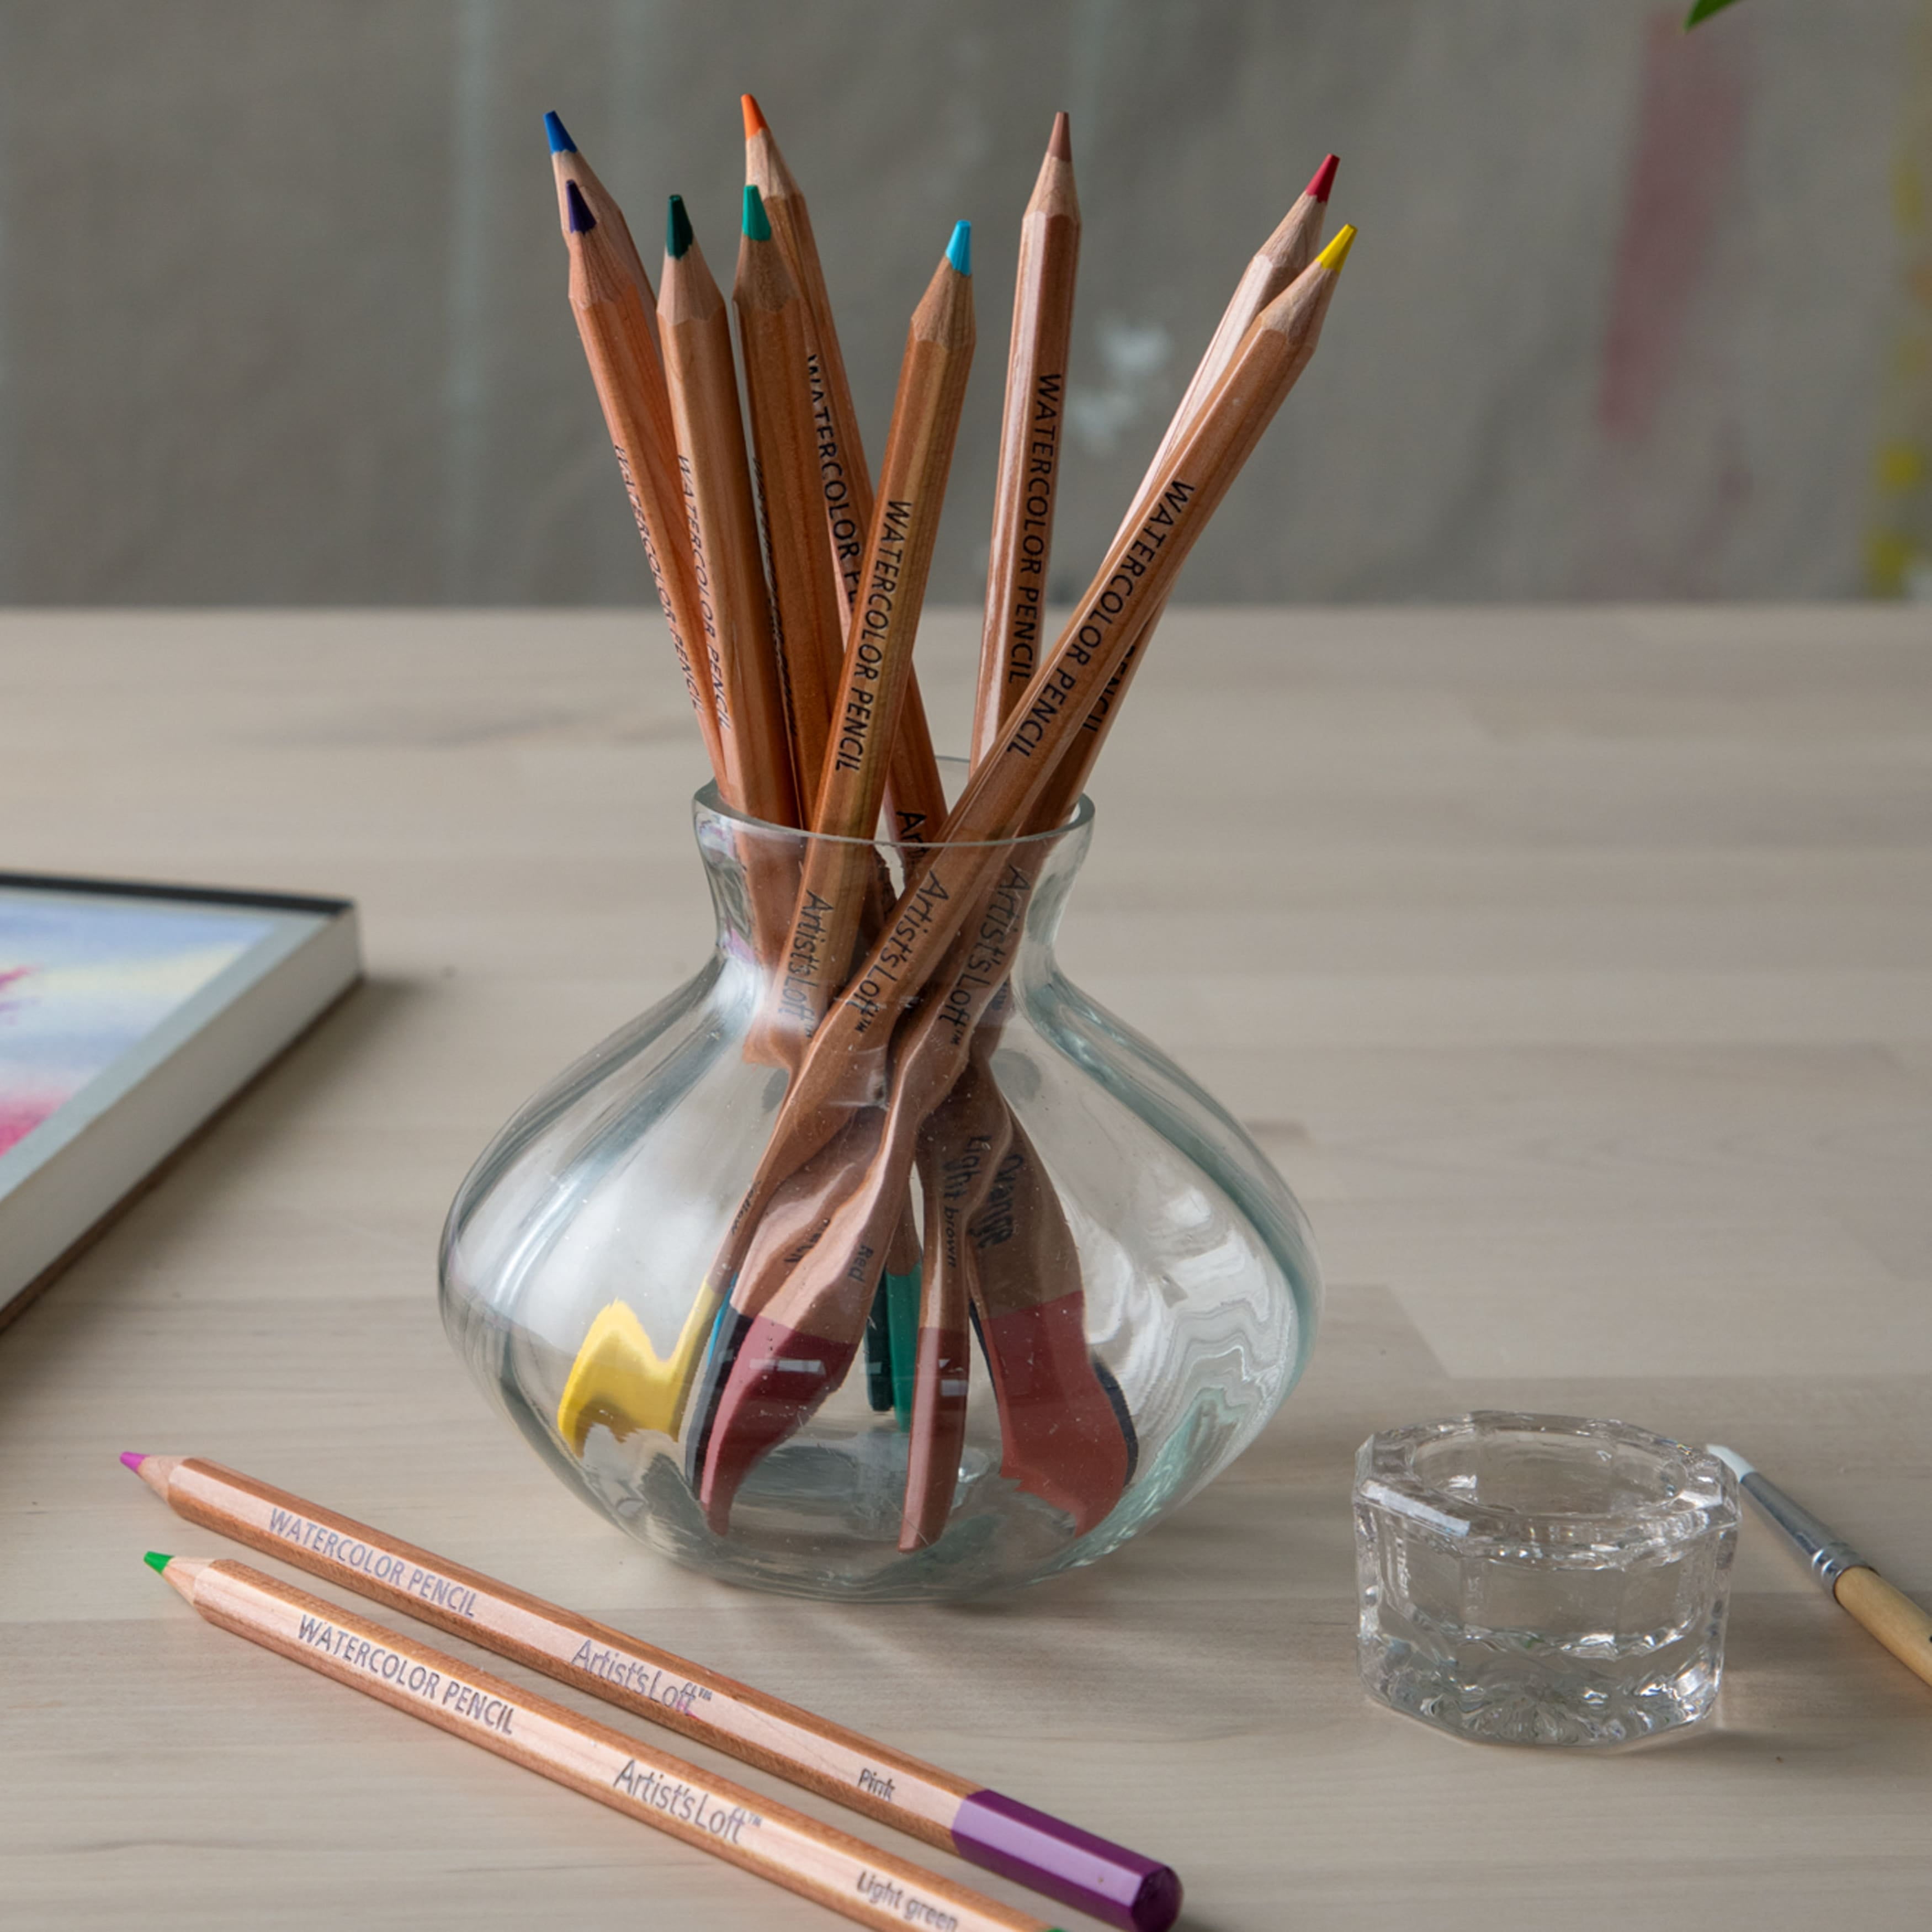 Office School Stationery Art Supplies Set of 12 Watercolor Pencils